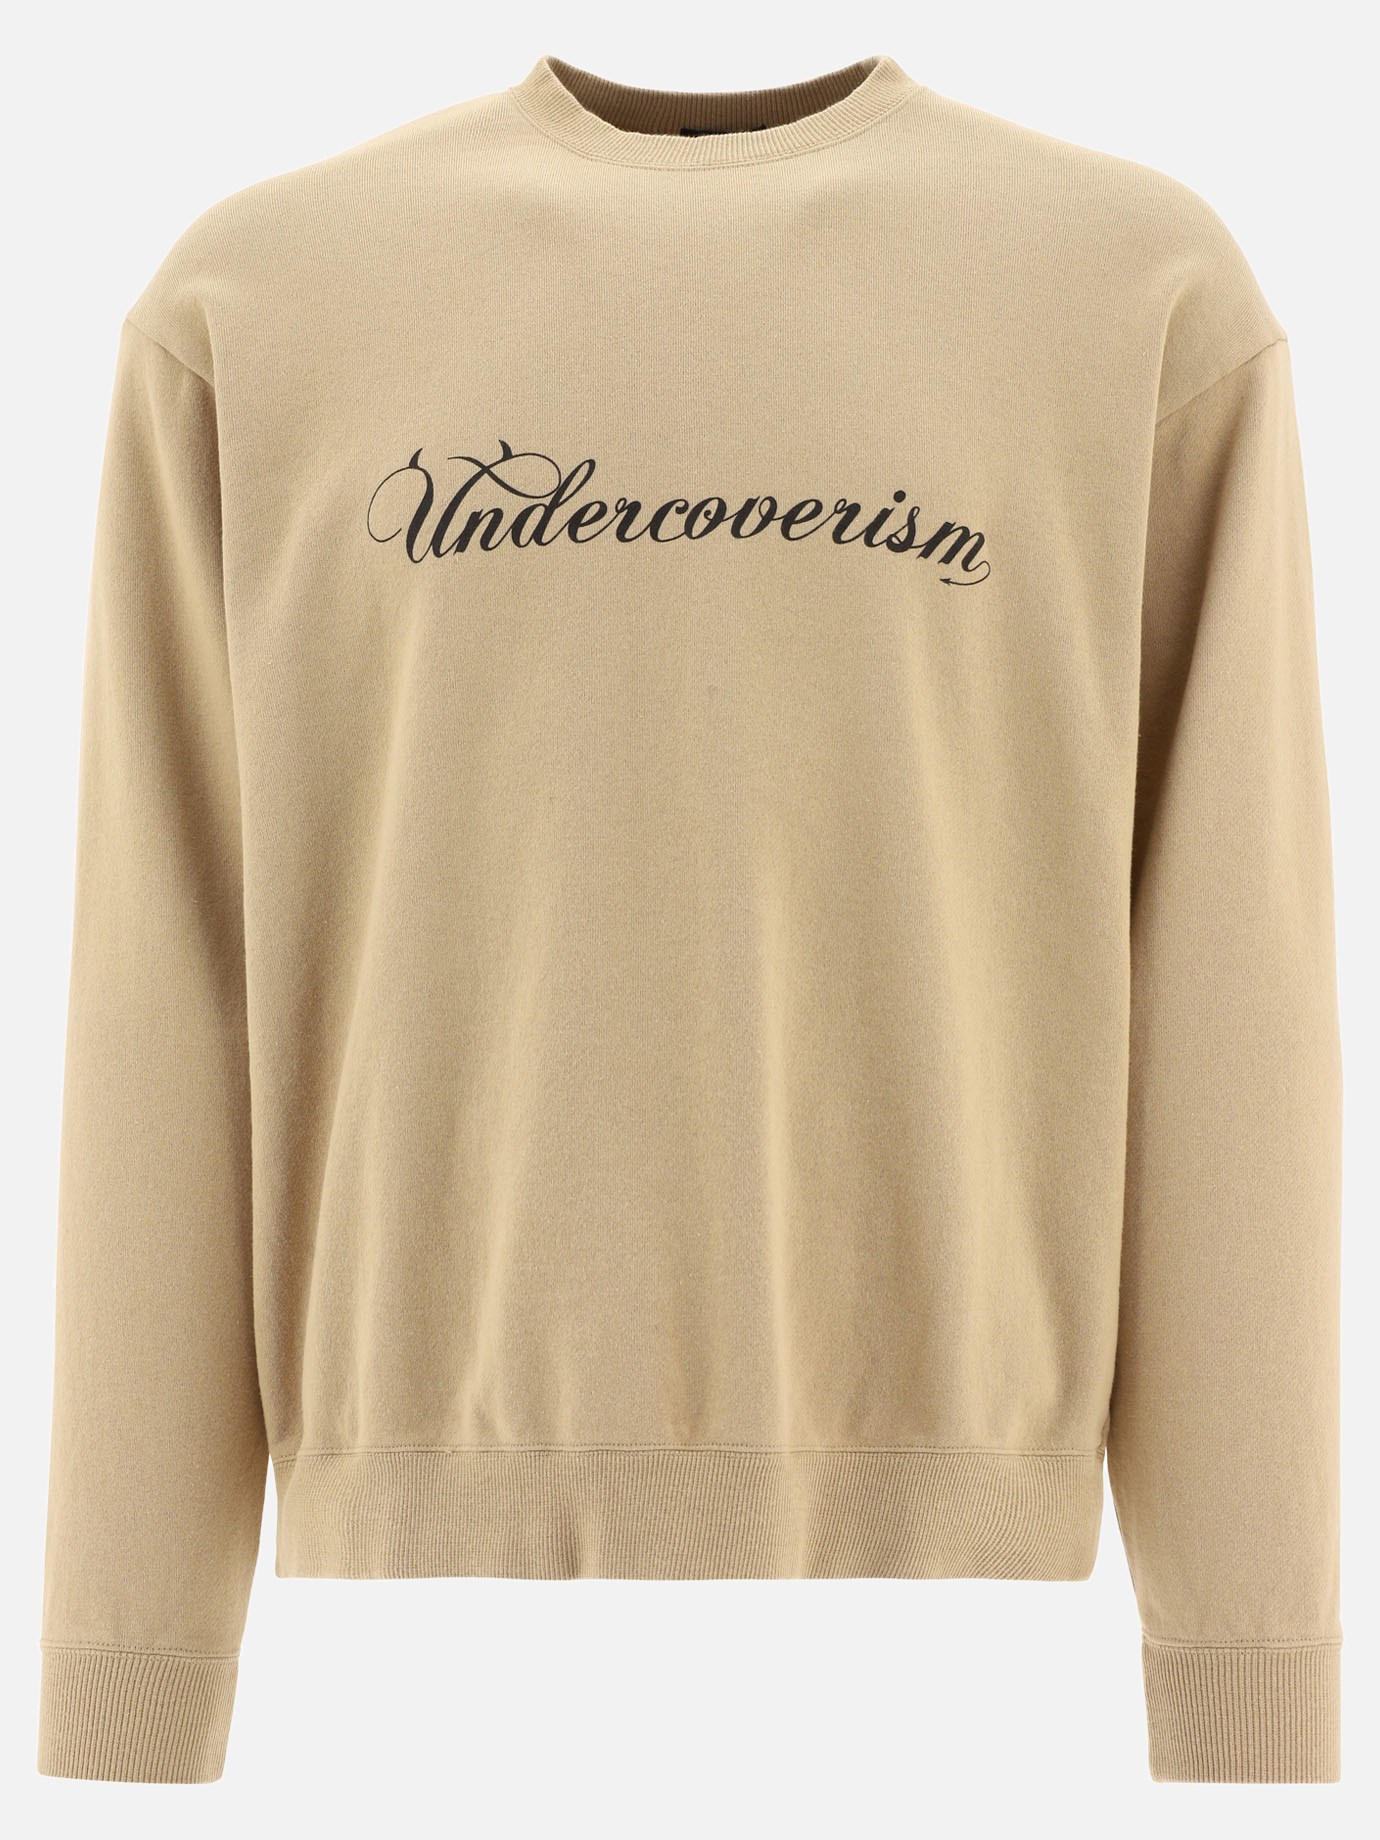  Undercoverism  sweatshirtby Undercoverism - 4